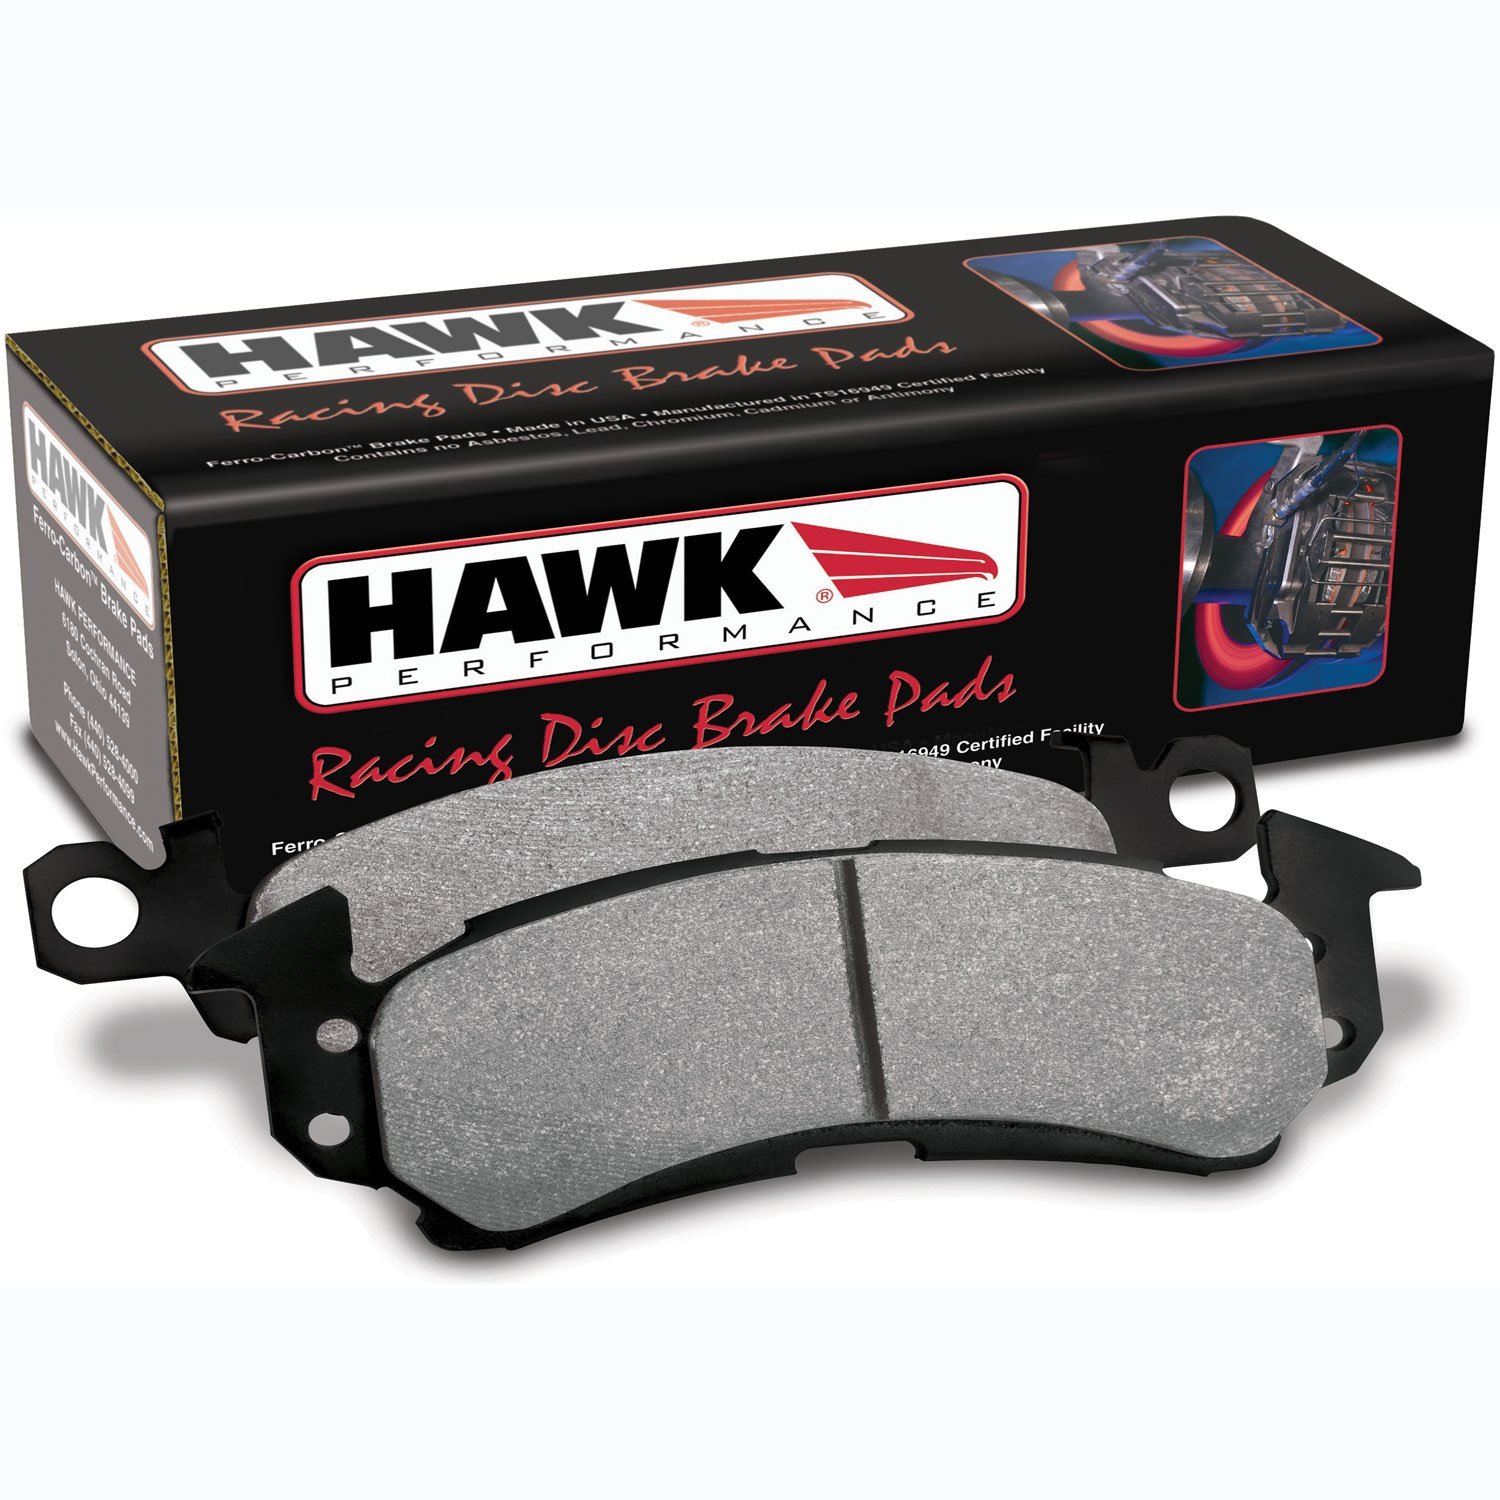 Disc Brake Pad HP Plus w/0.668 Thickness